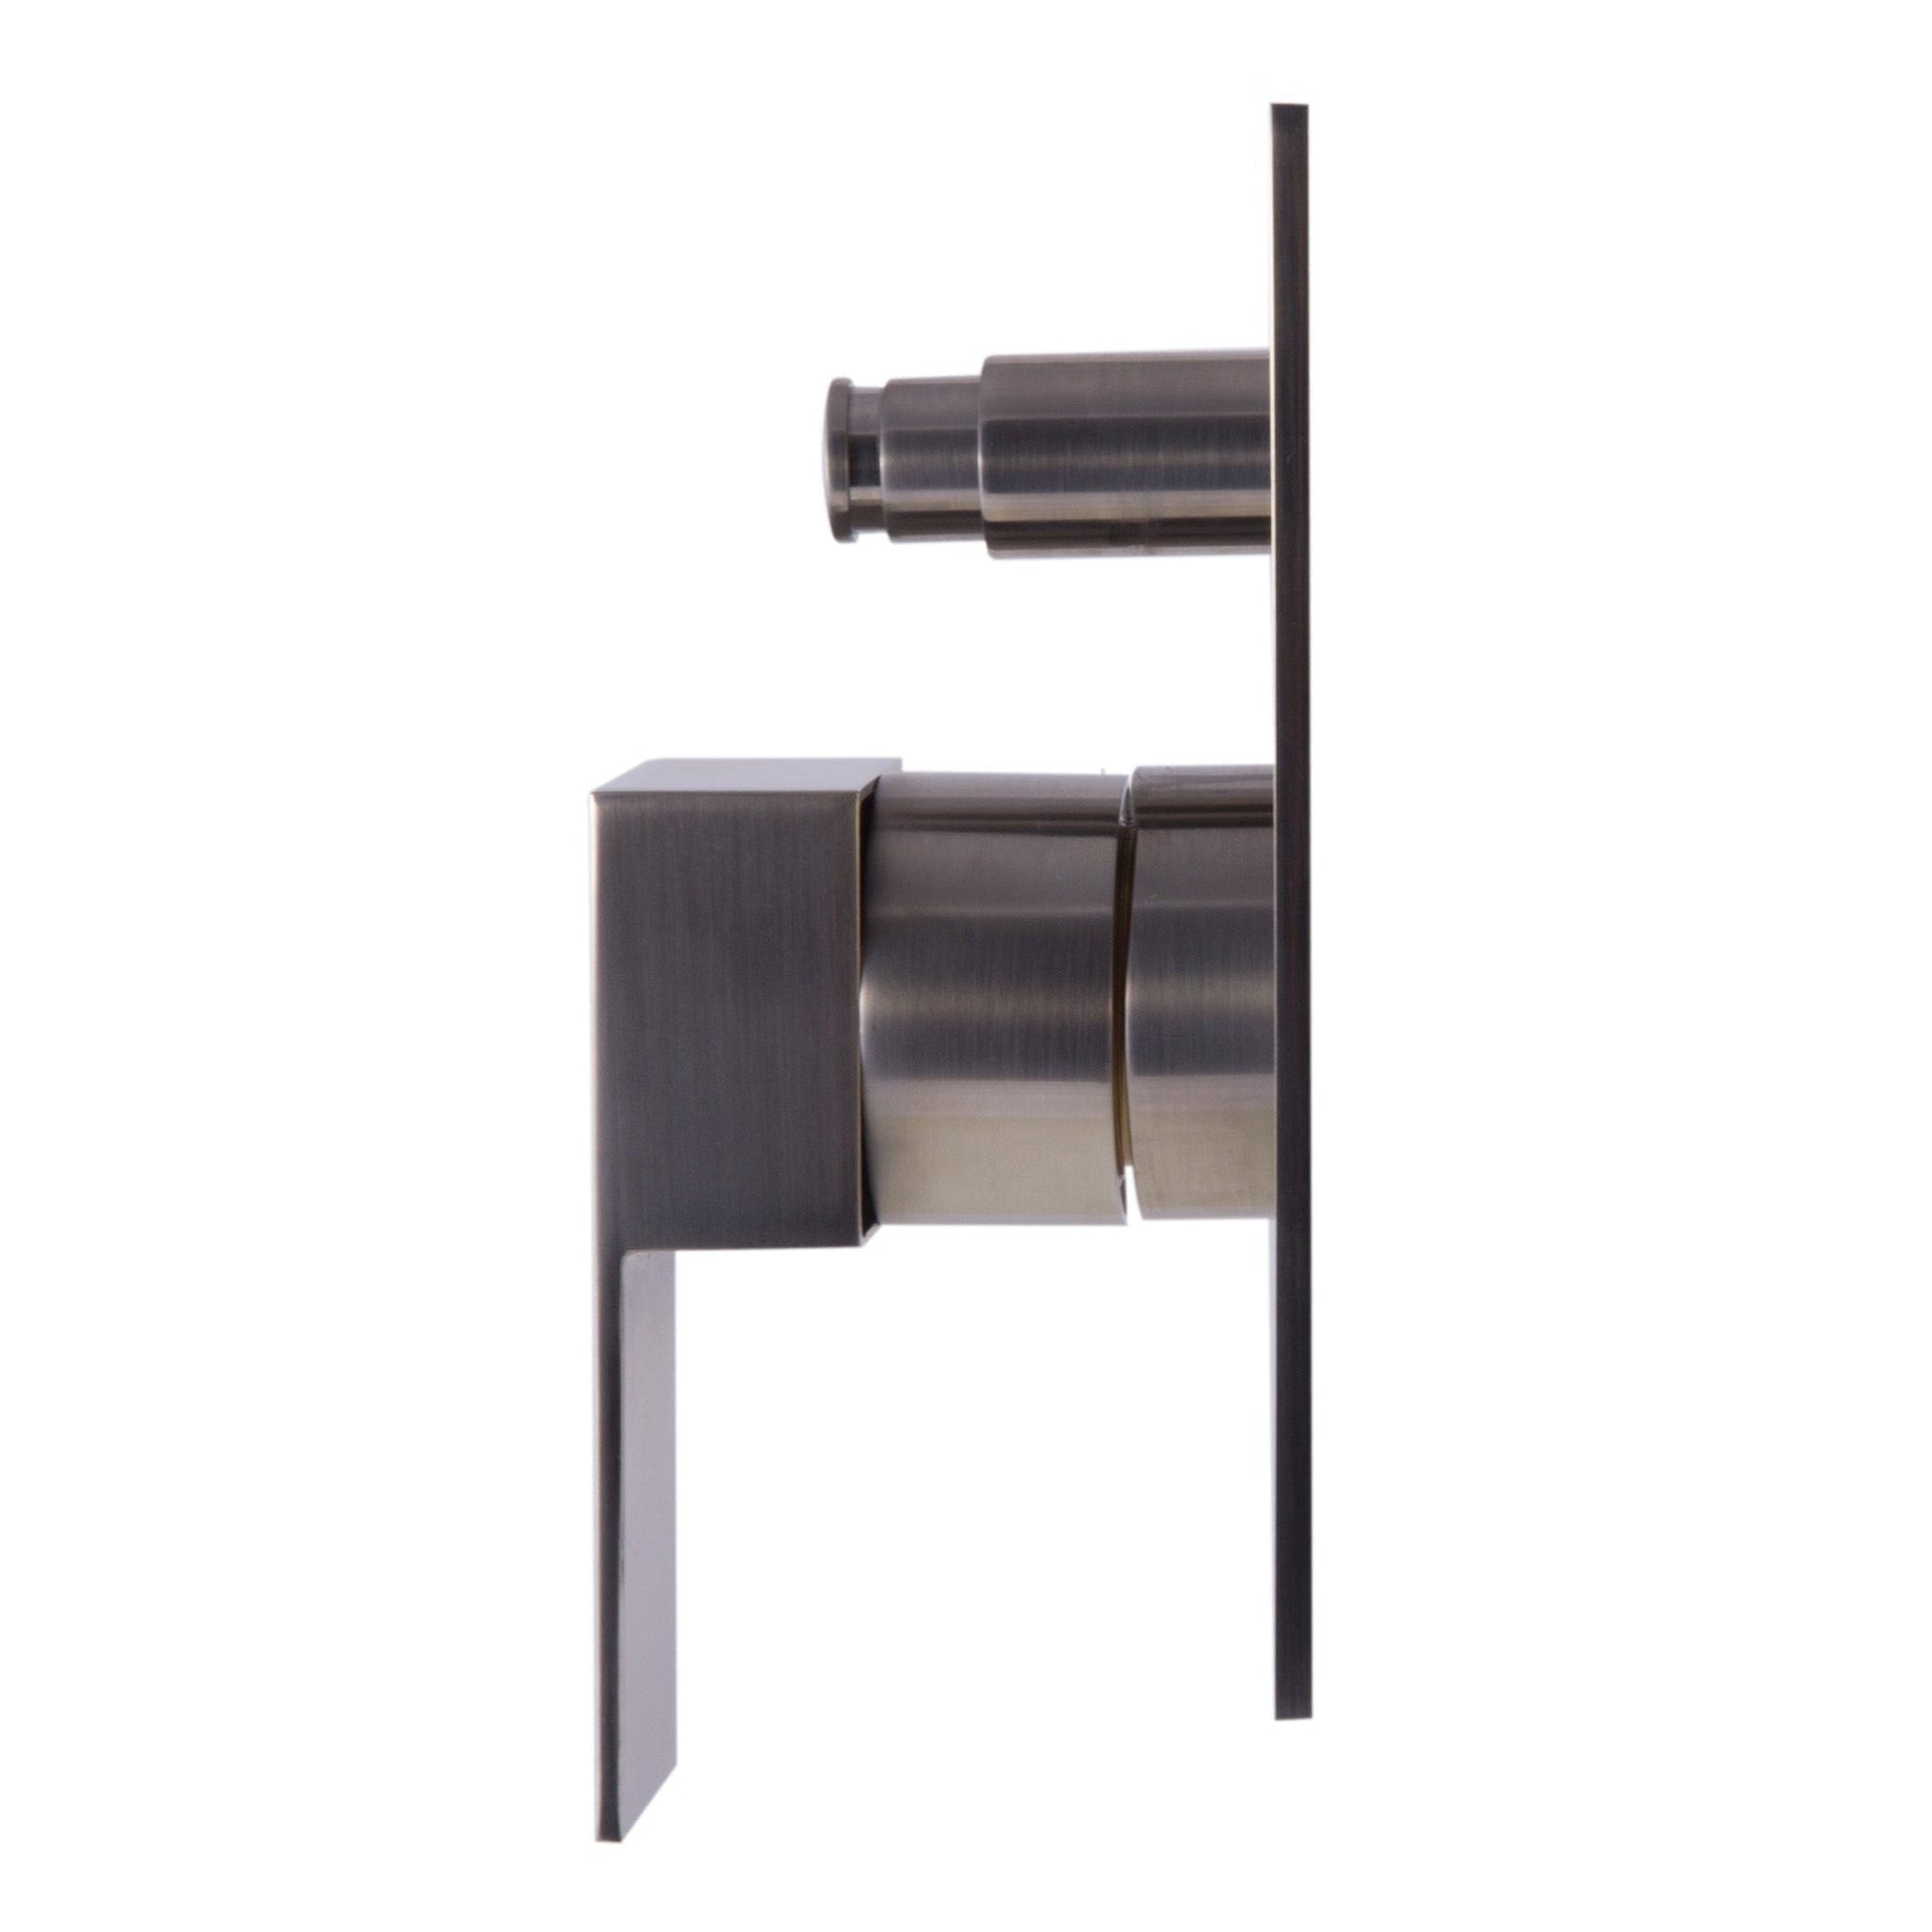 ALFI Brand AB6801-BN Square Brushed Nickel Pressure Balanced Shower Mixer With Diverter